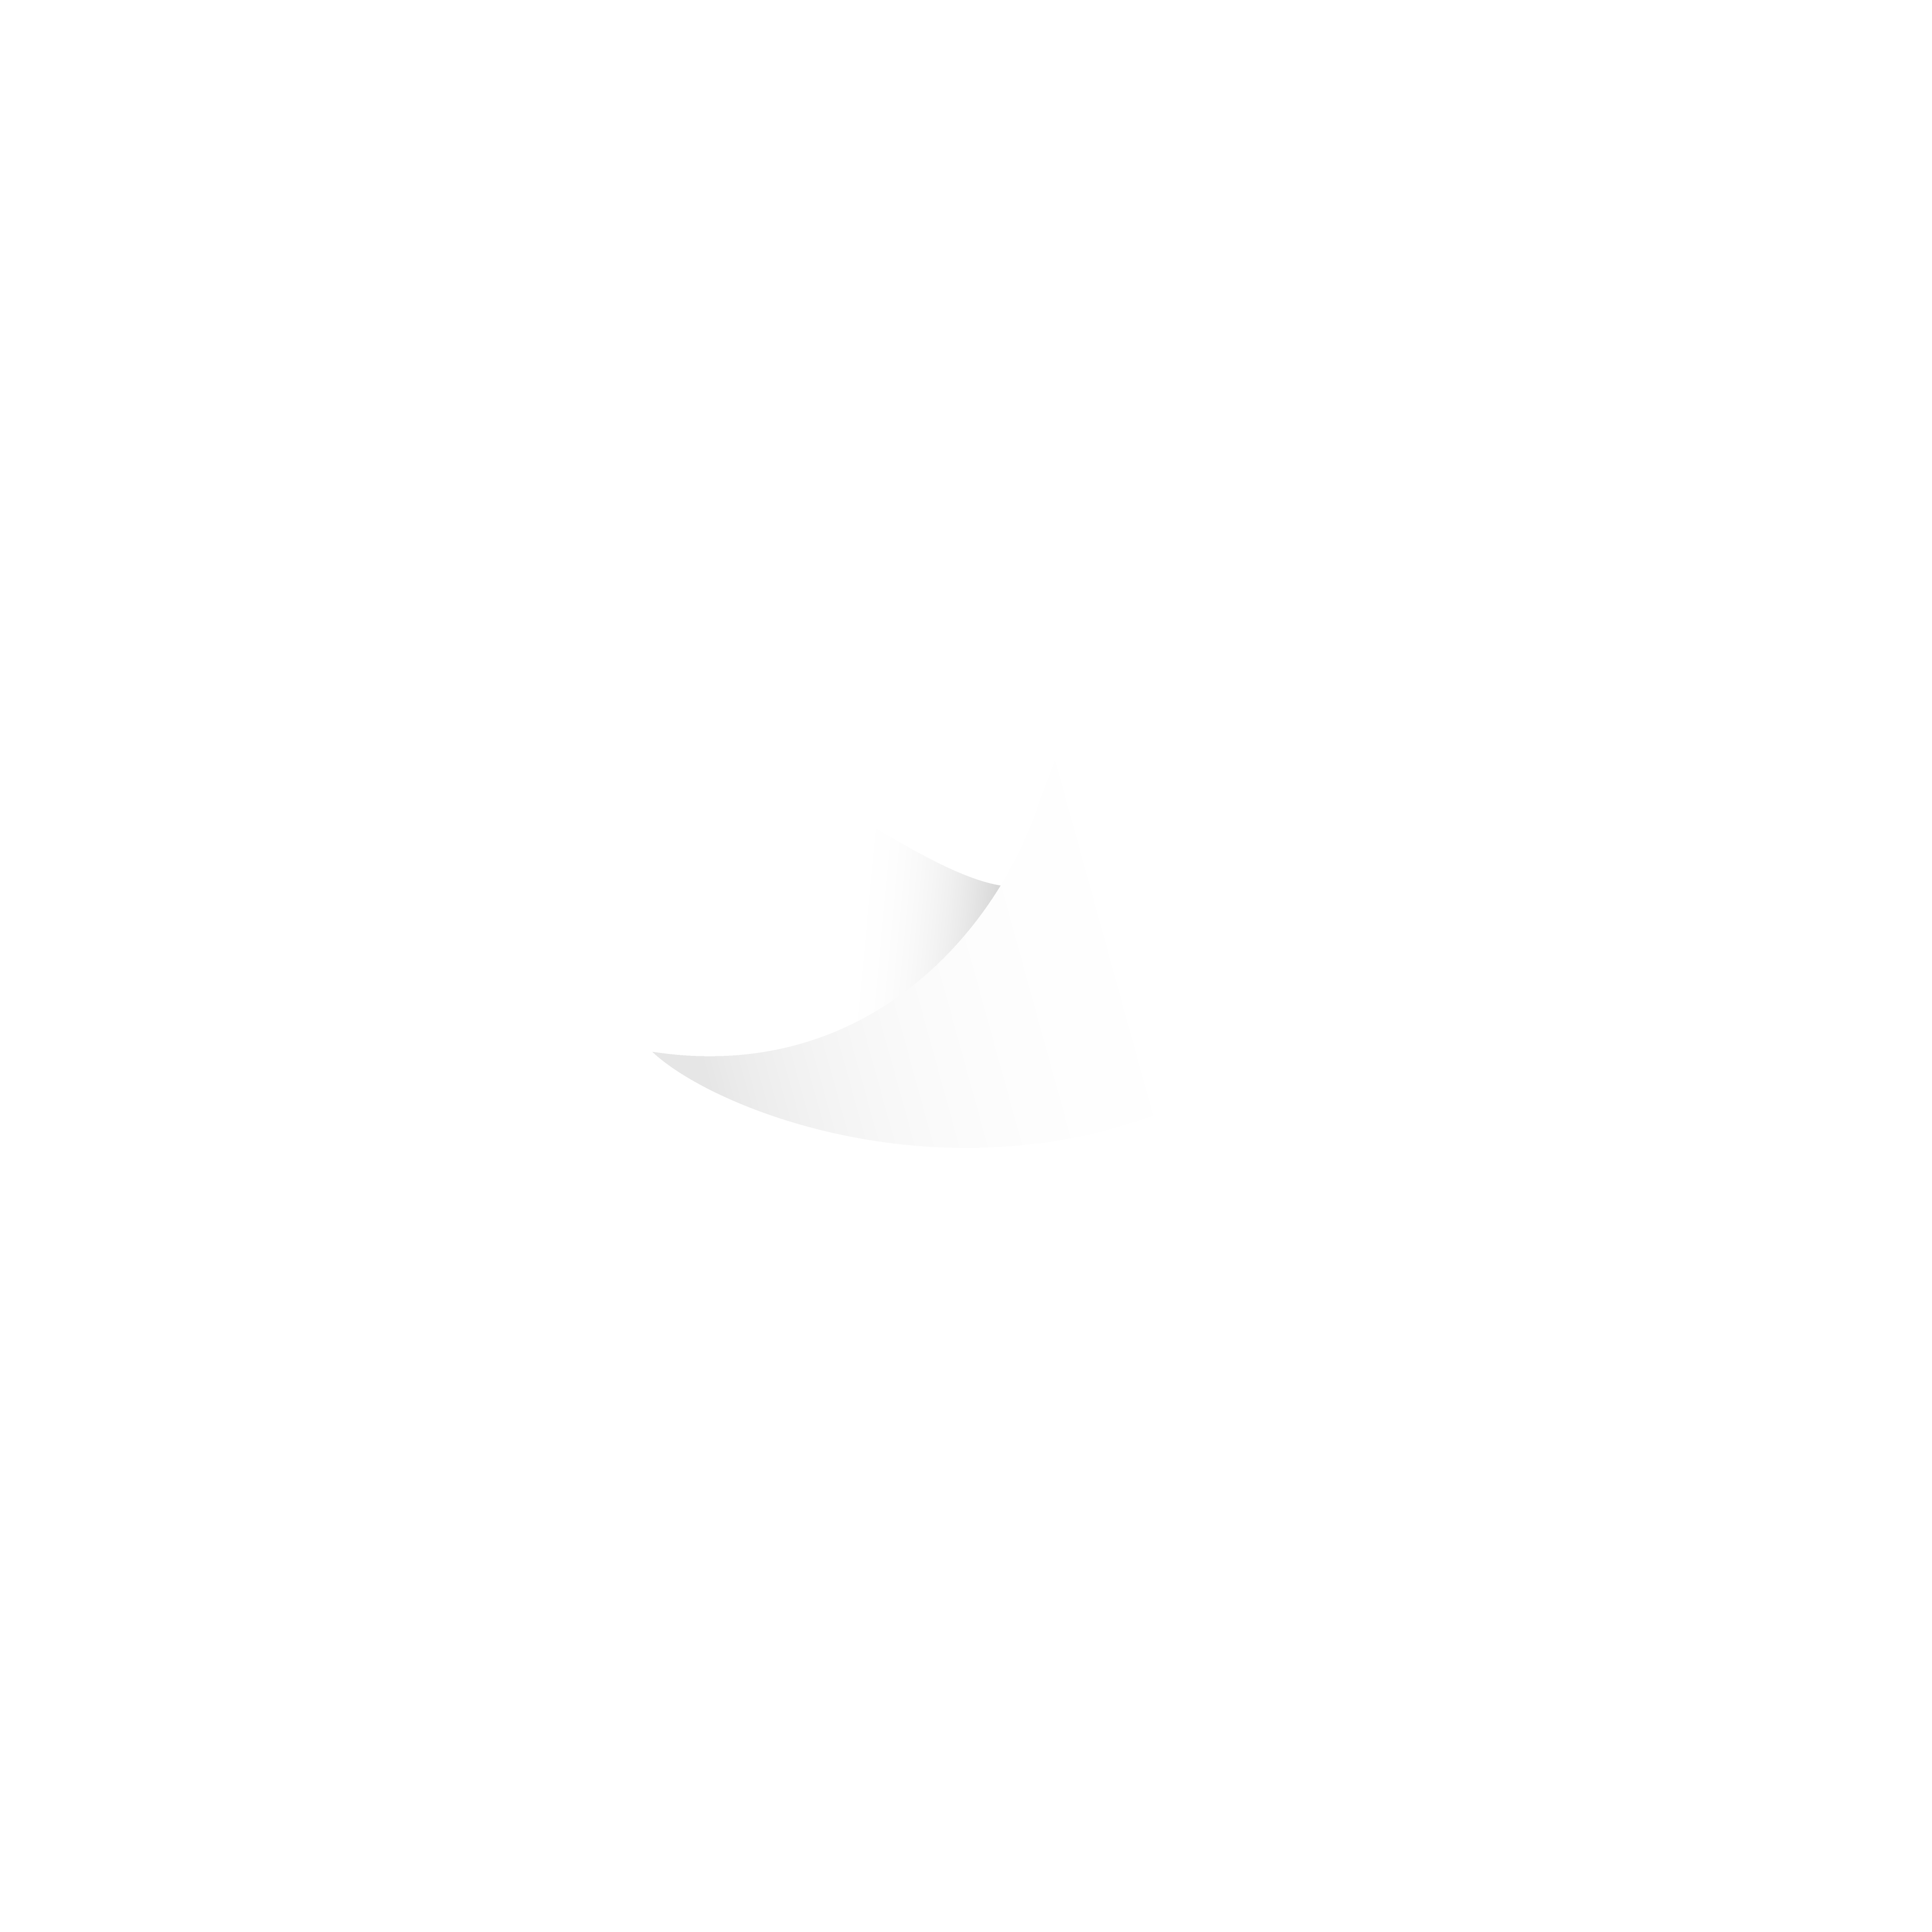 Winecata